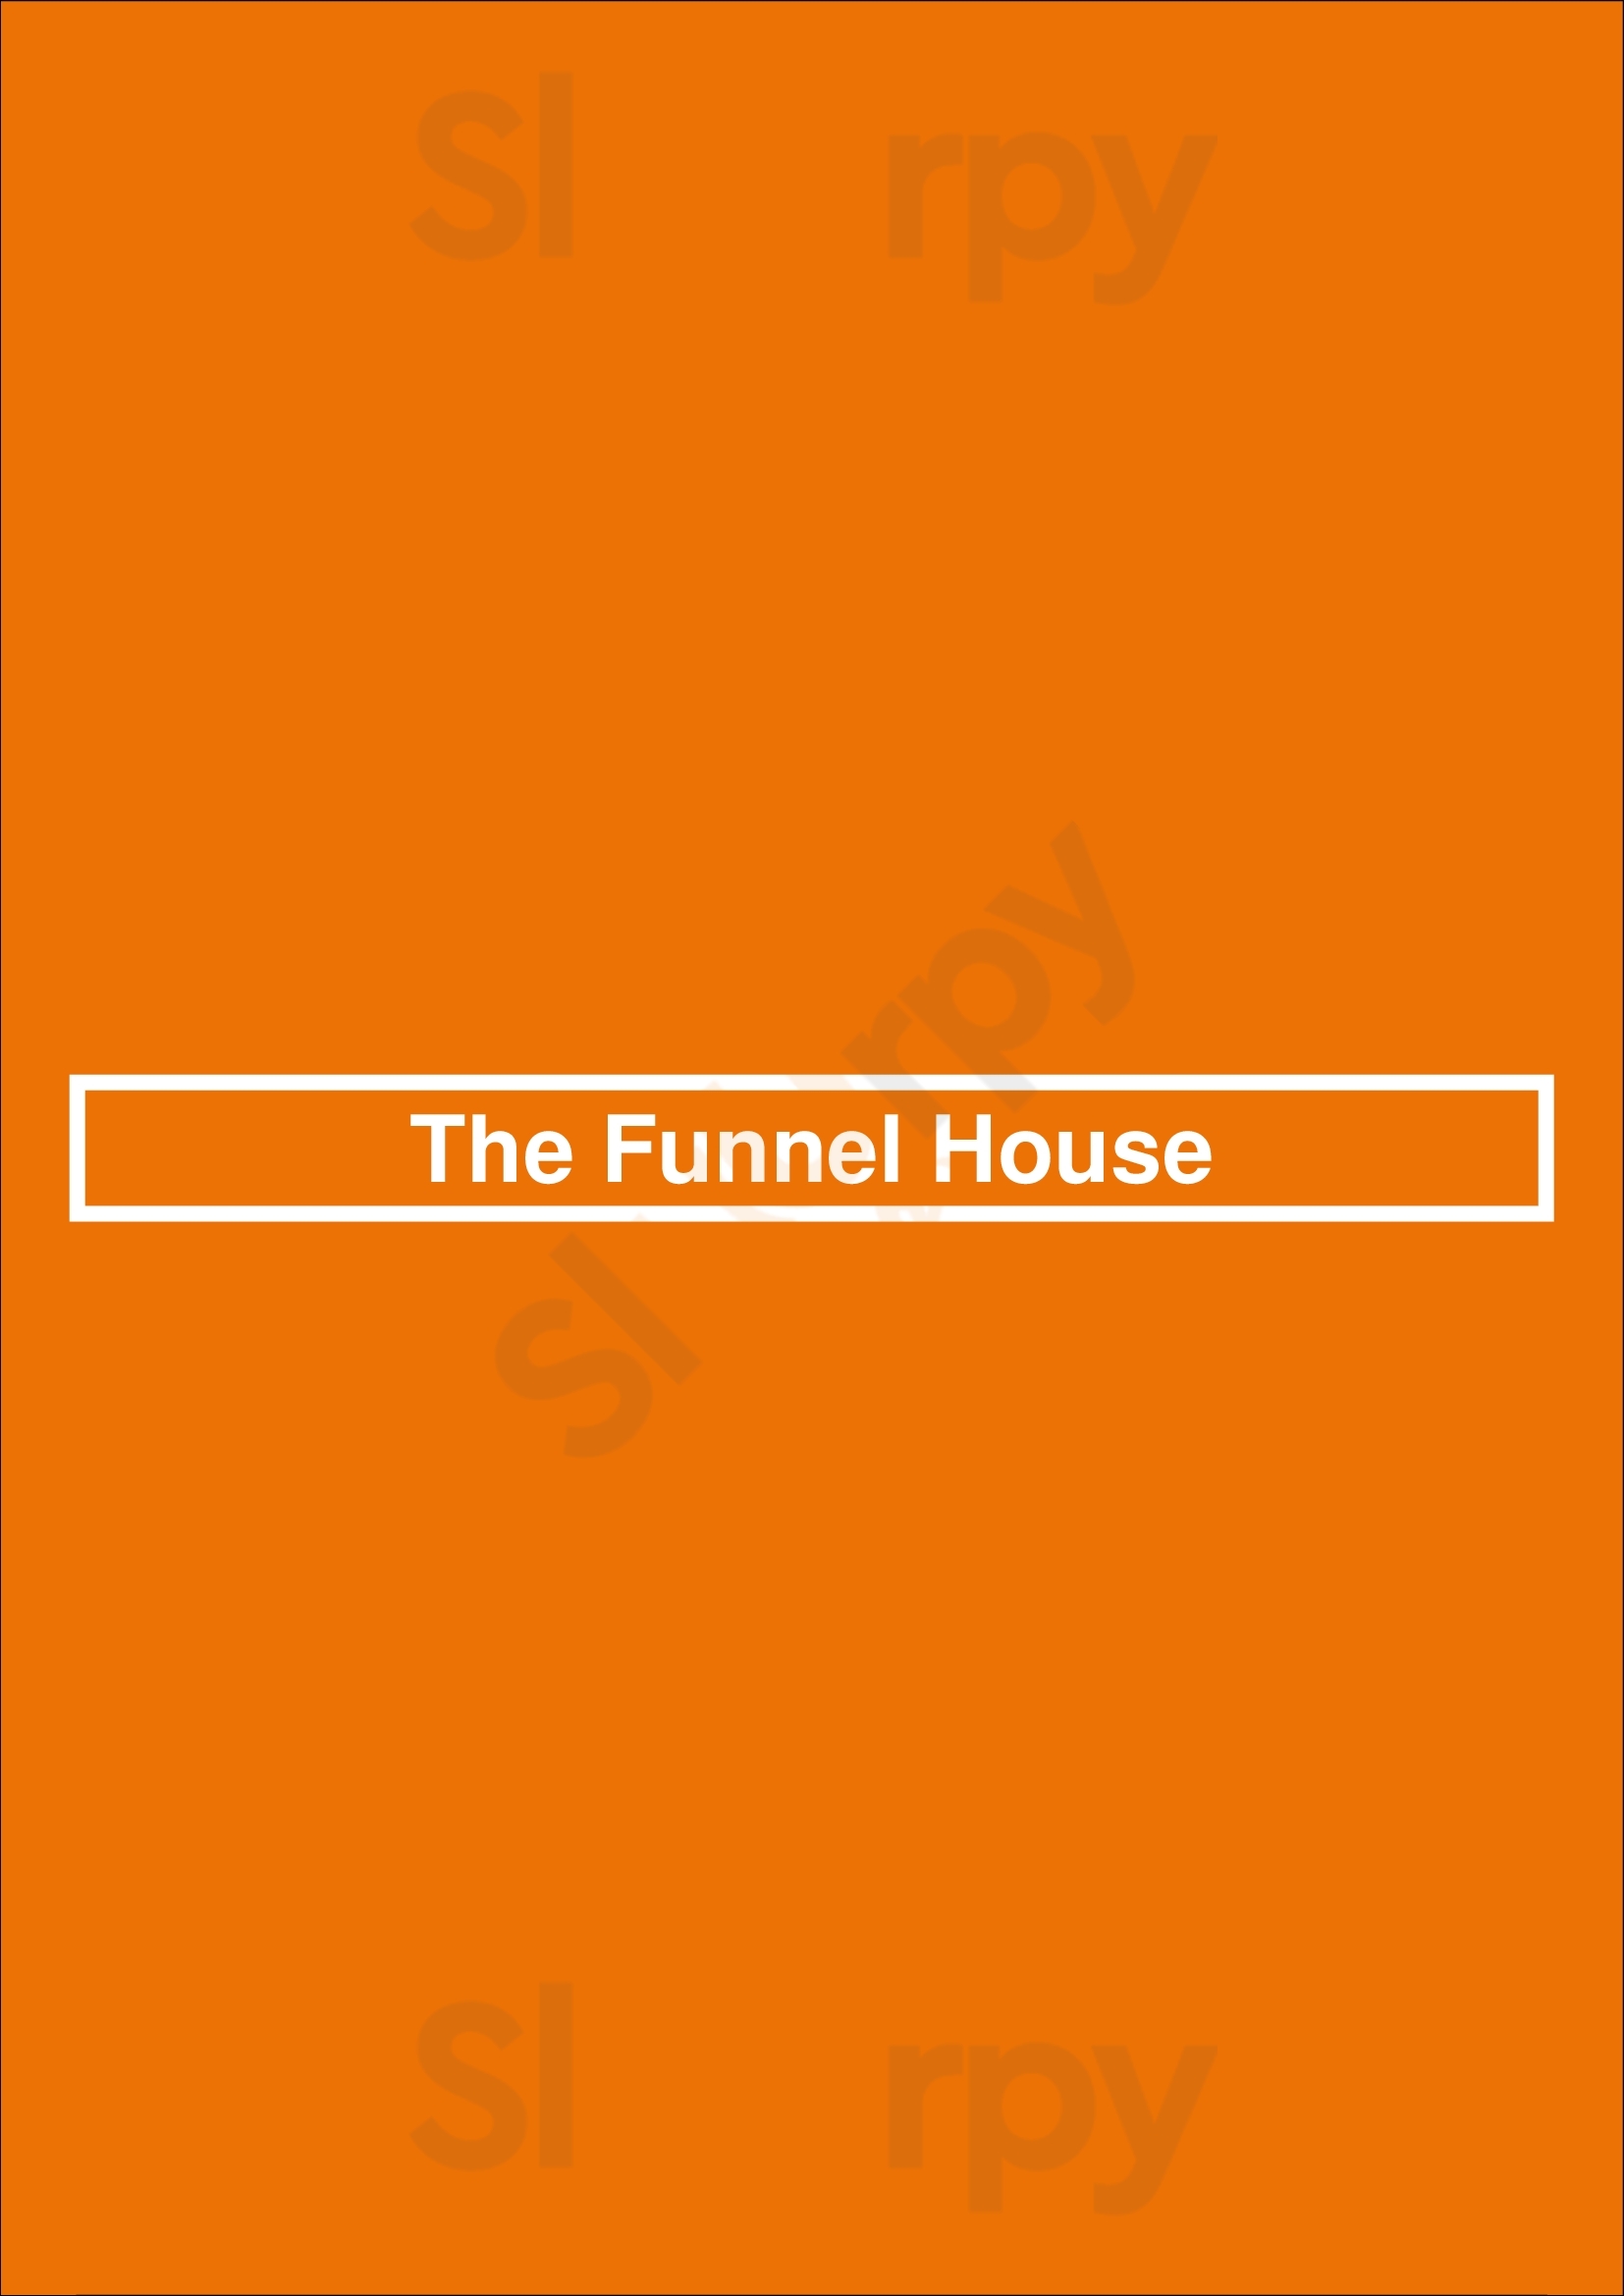 The Funnel House Huntington Beach Menu - 1